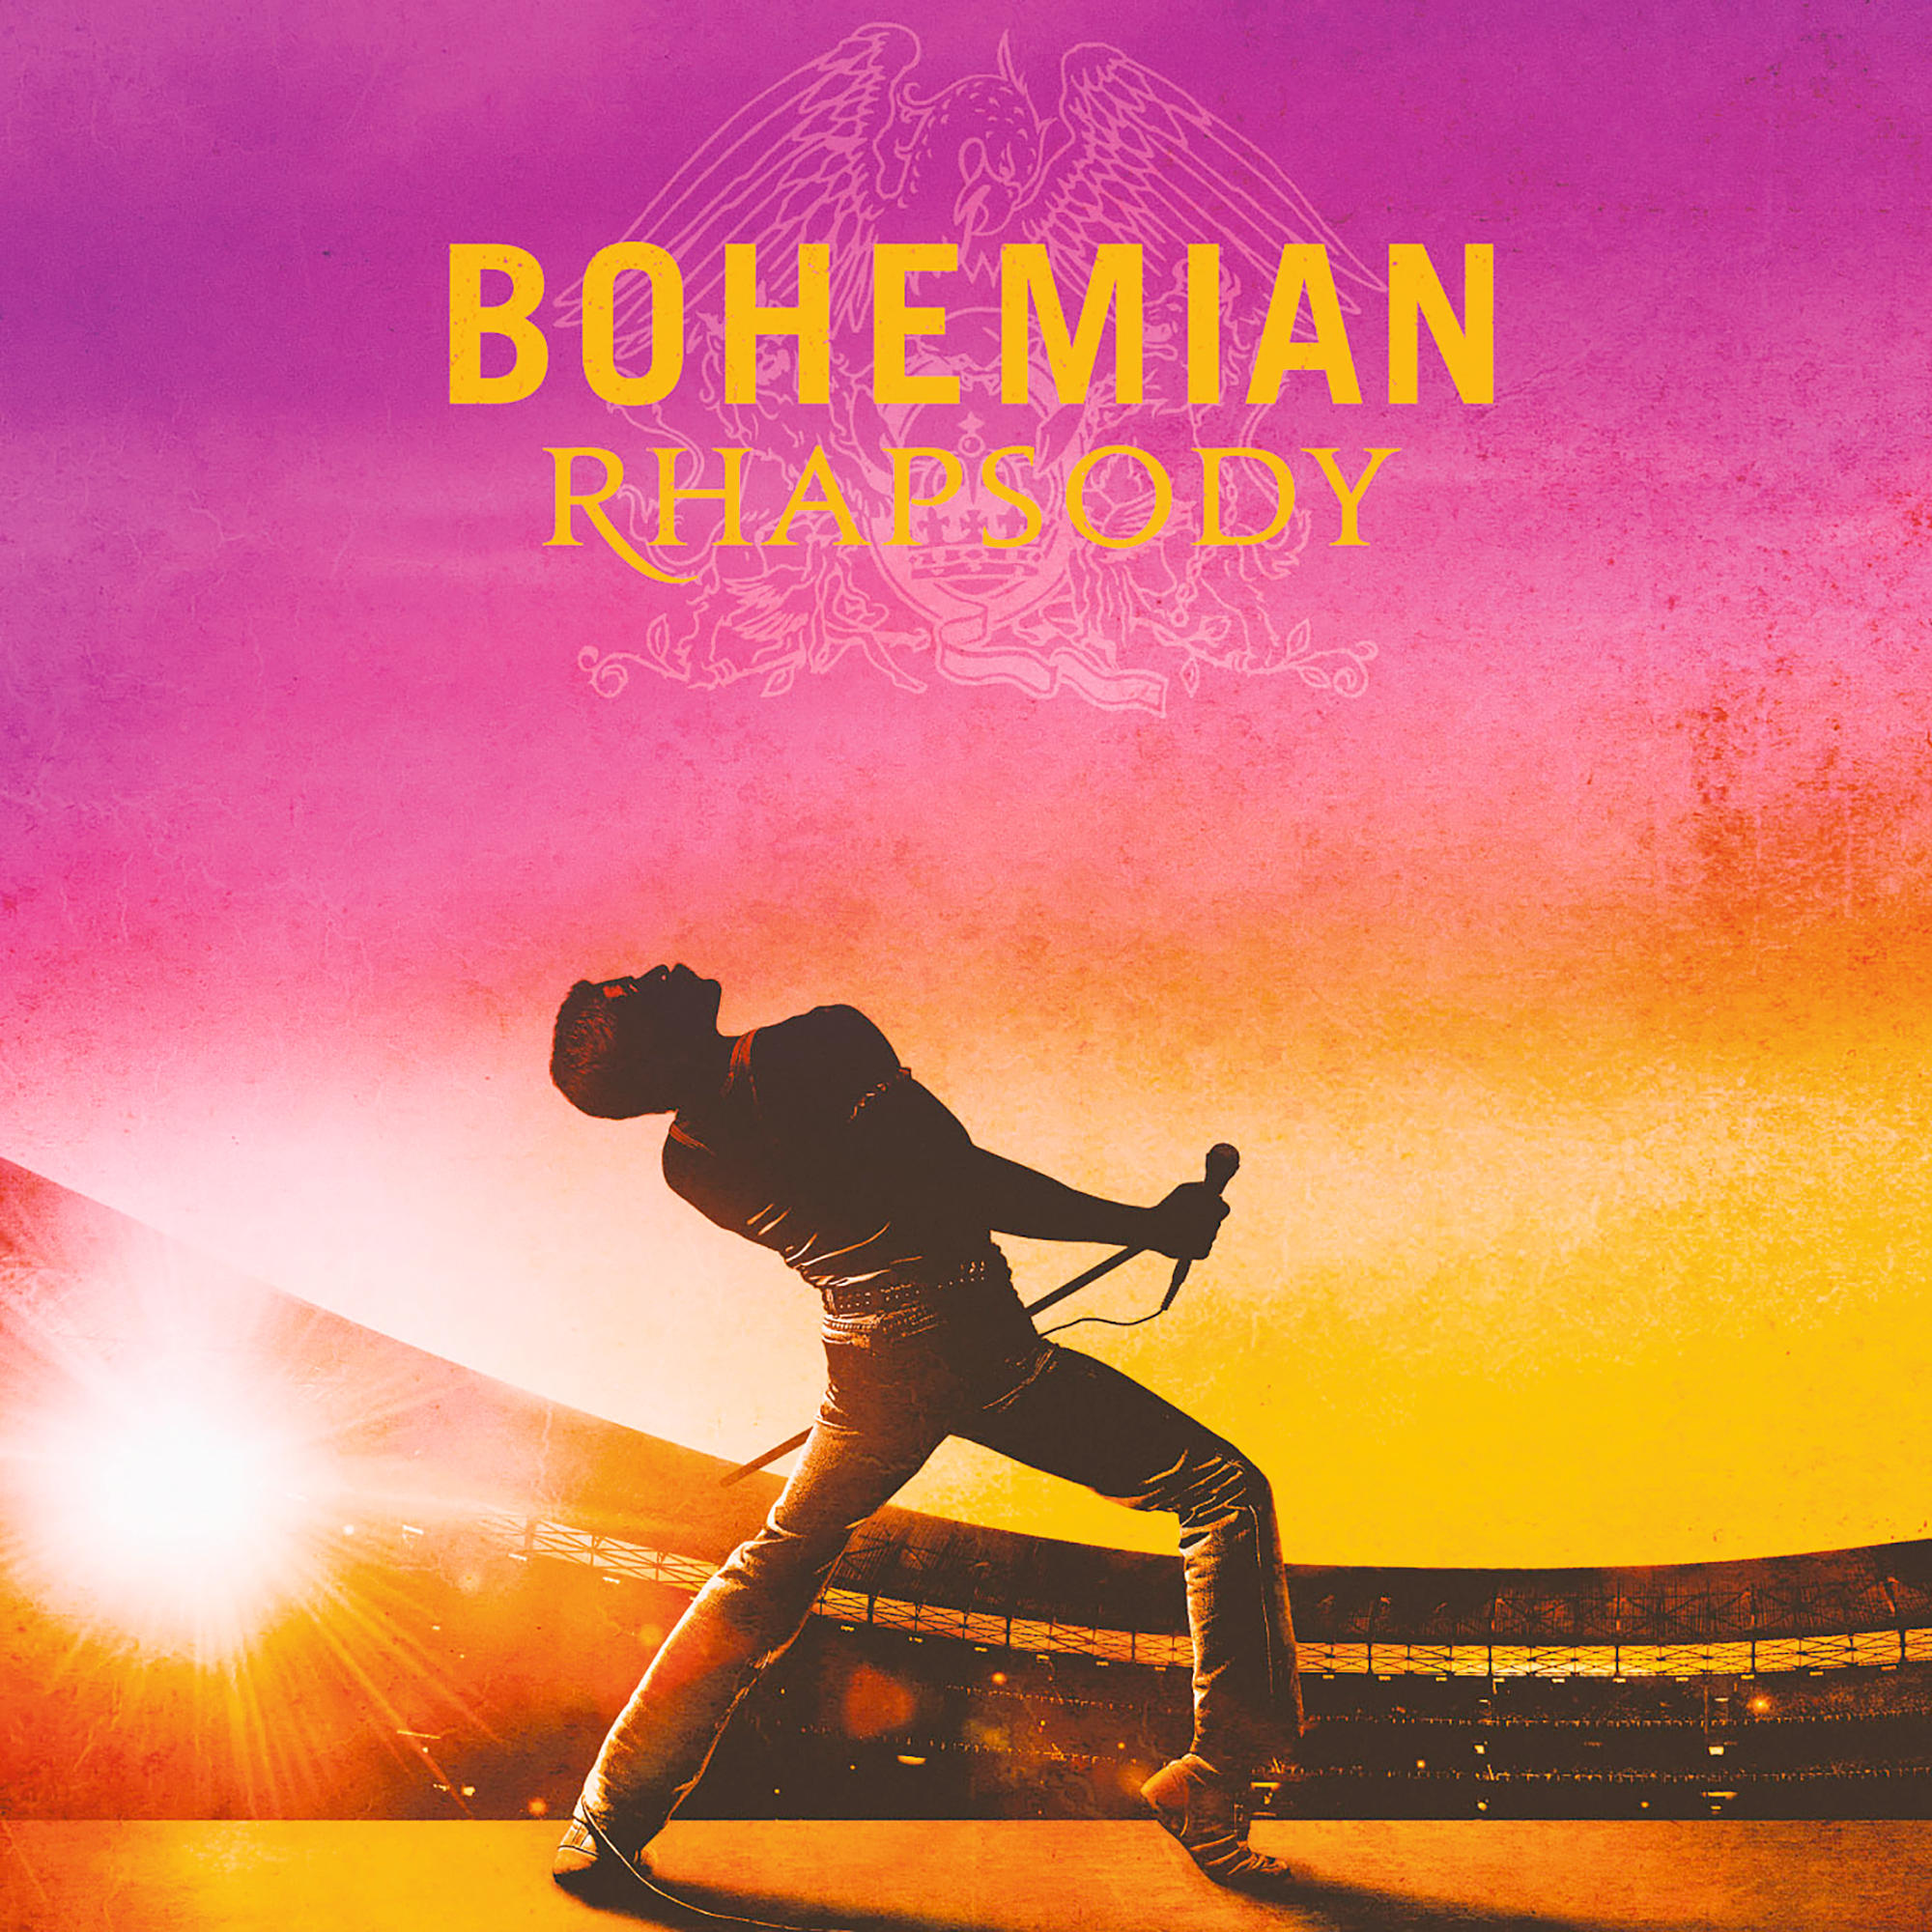 Queen - Bohemian Rhapsody (The Original Soundtrack) (CD) 